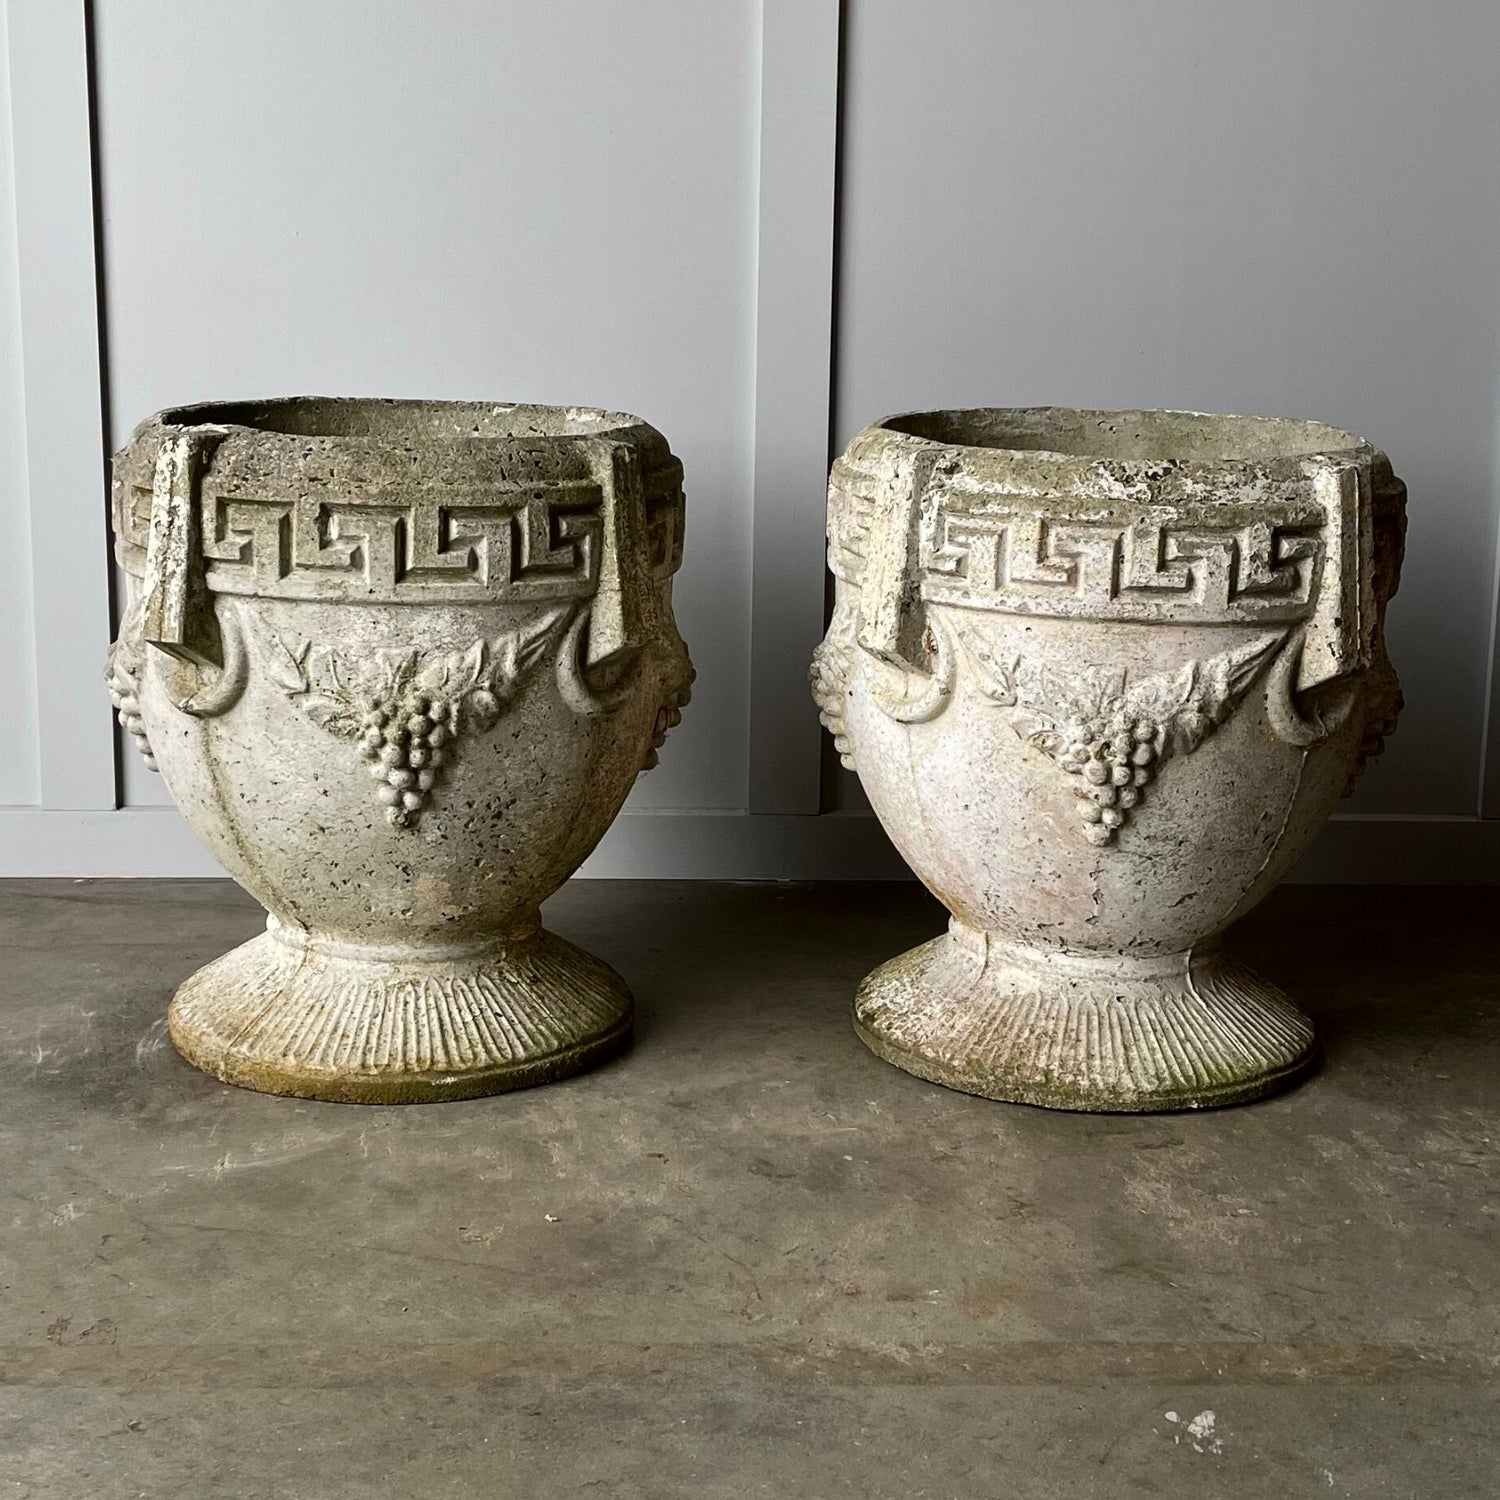 Antique garden pots